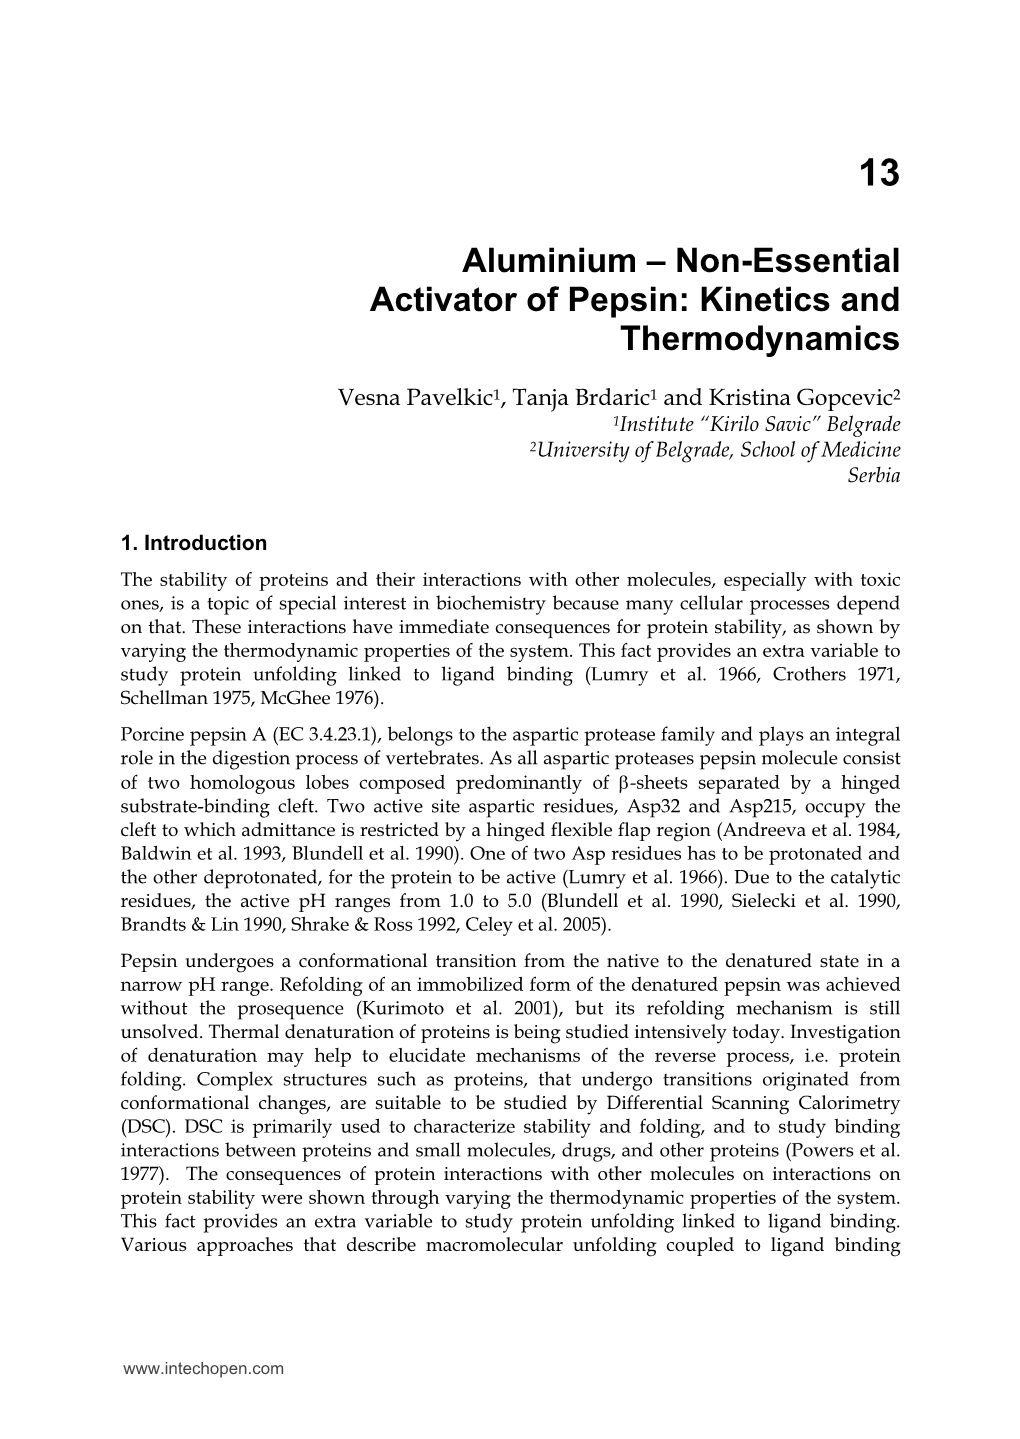 Non-Essential Activator of Pepsin: Kinetics and Thermodynamics